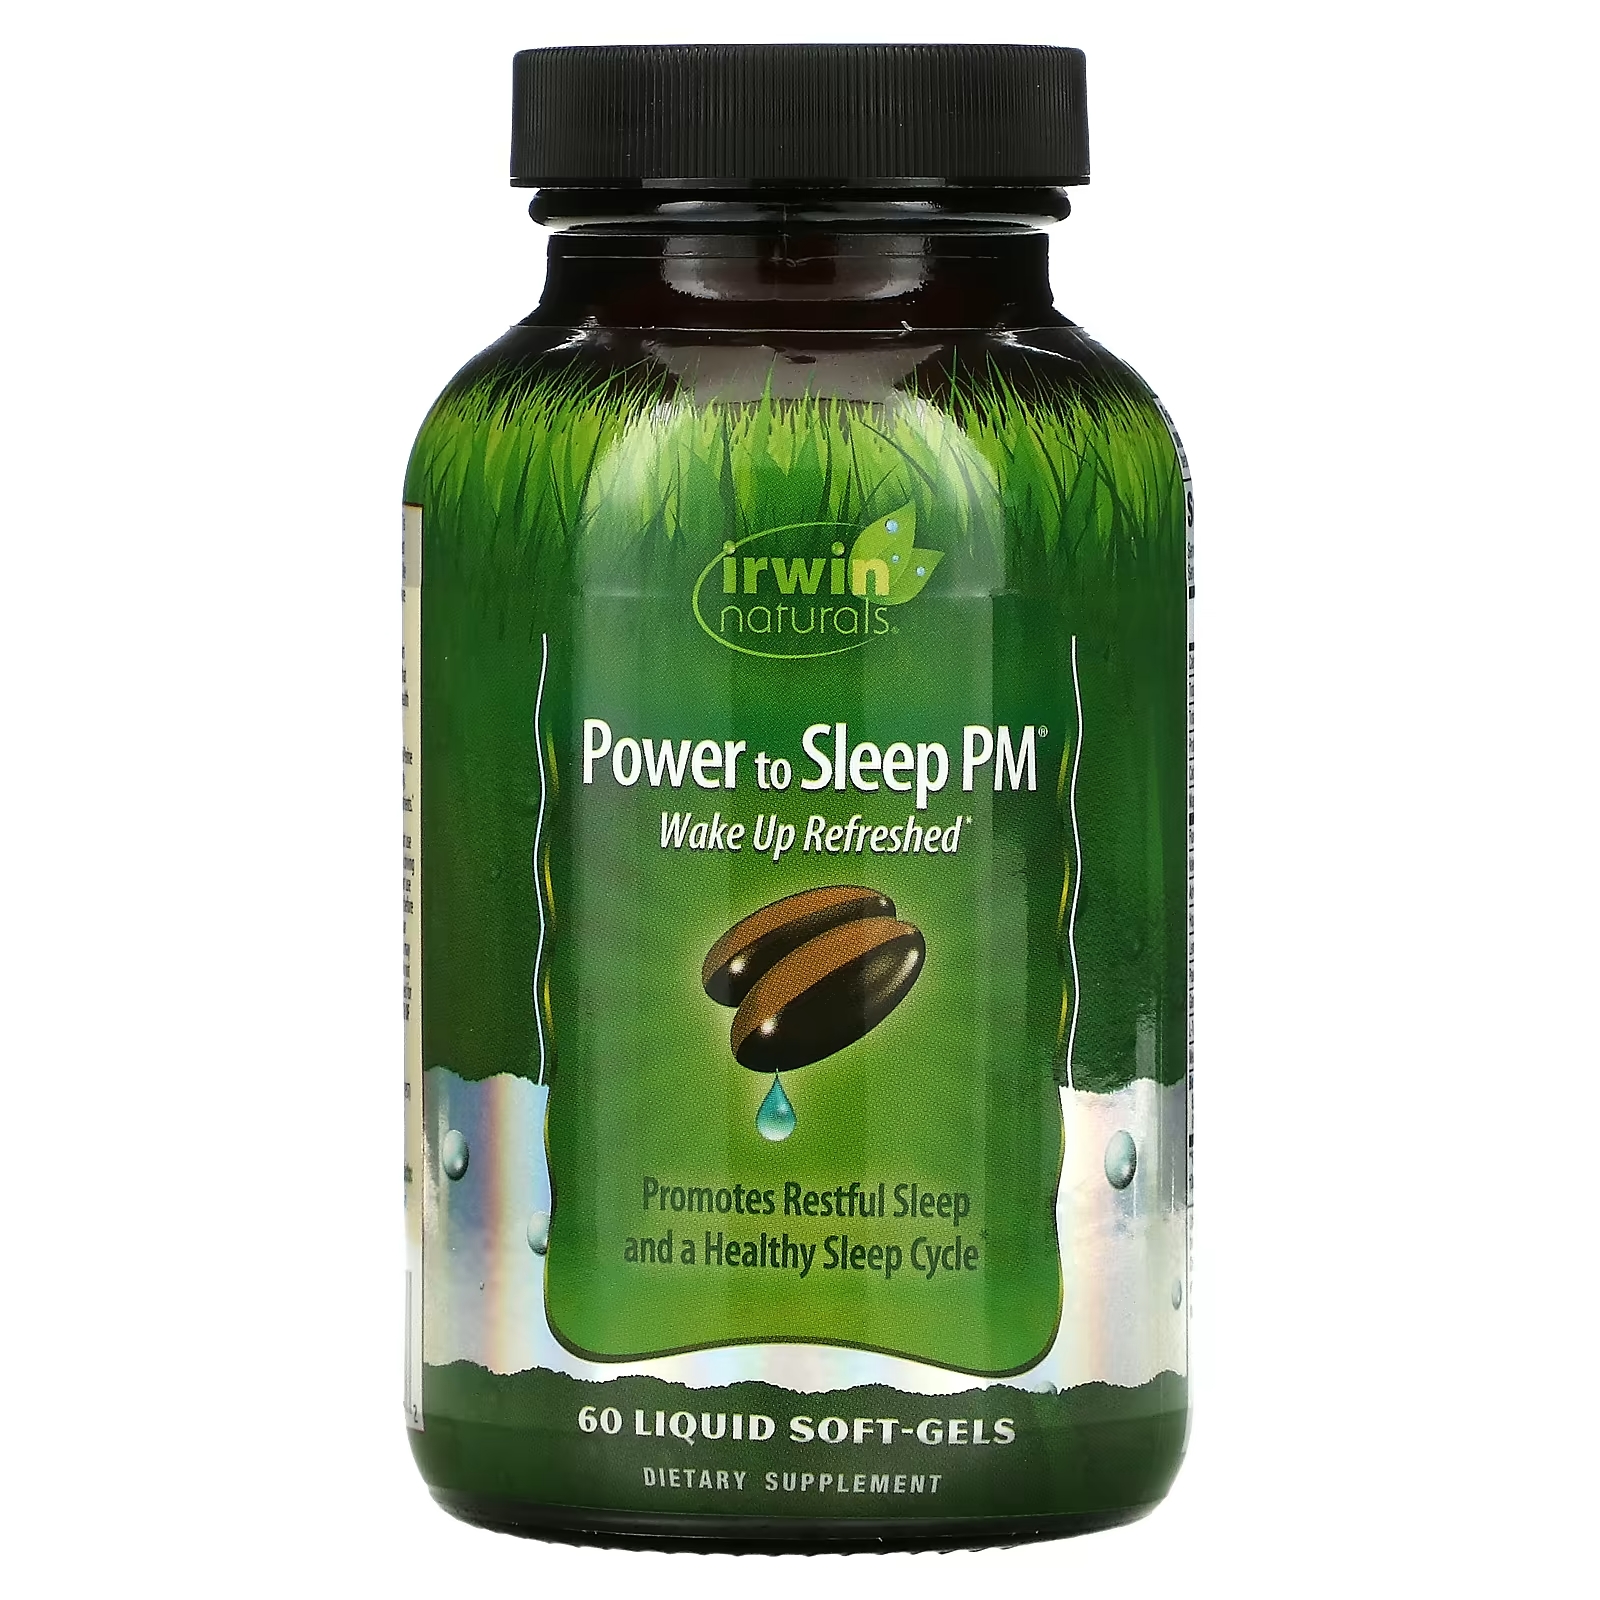 Пищевая Добавка Irwin Naturals Power to Sleep, 60 мягких капсул пищевая добавка irwin naturals power to sleep pm 50 мягких капсул с жидкостью